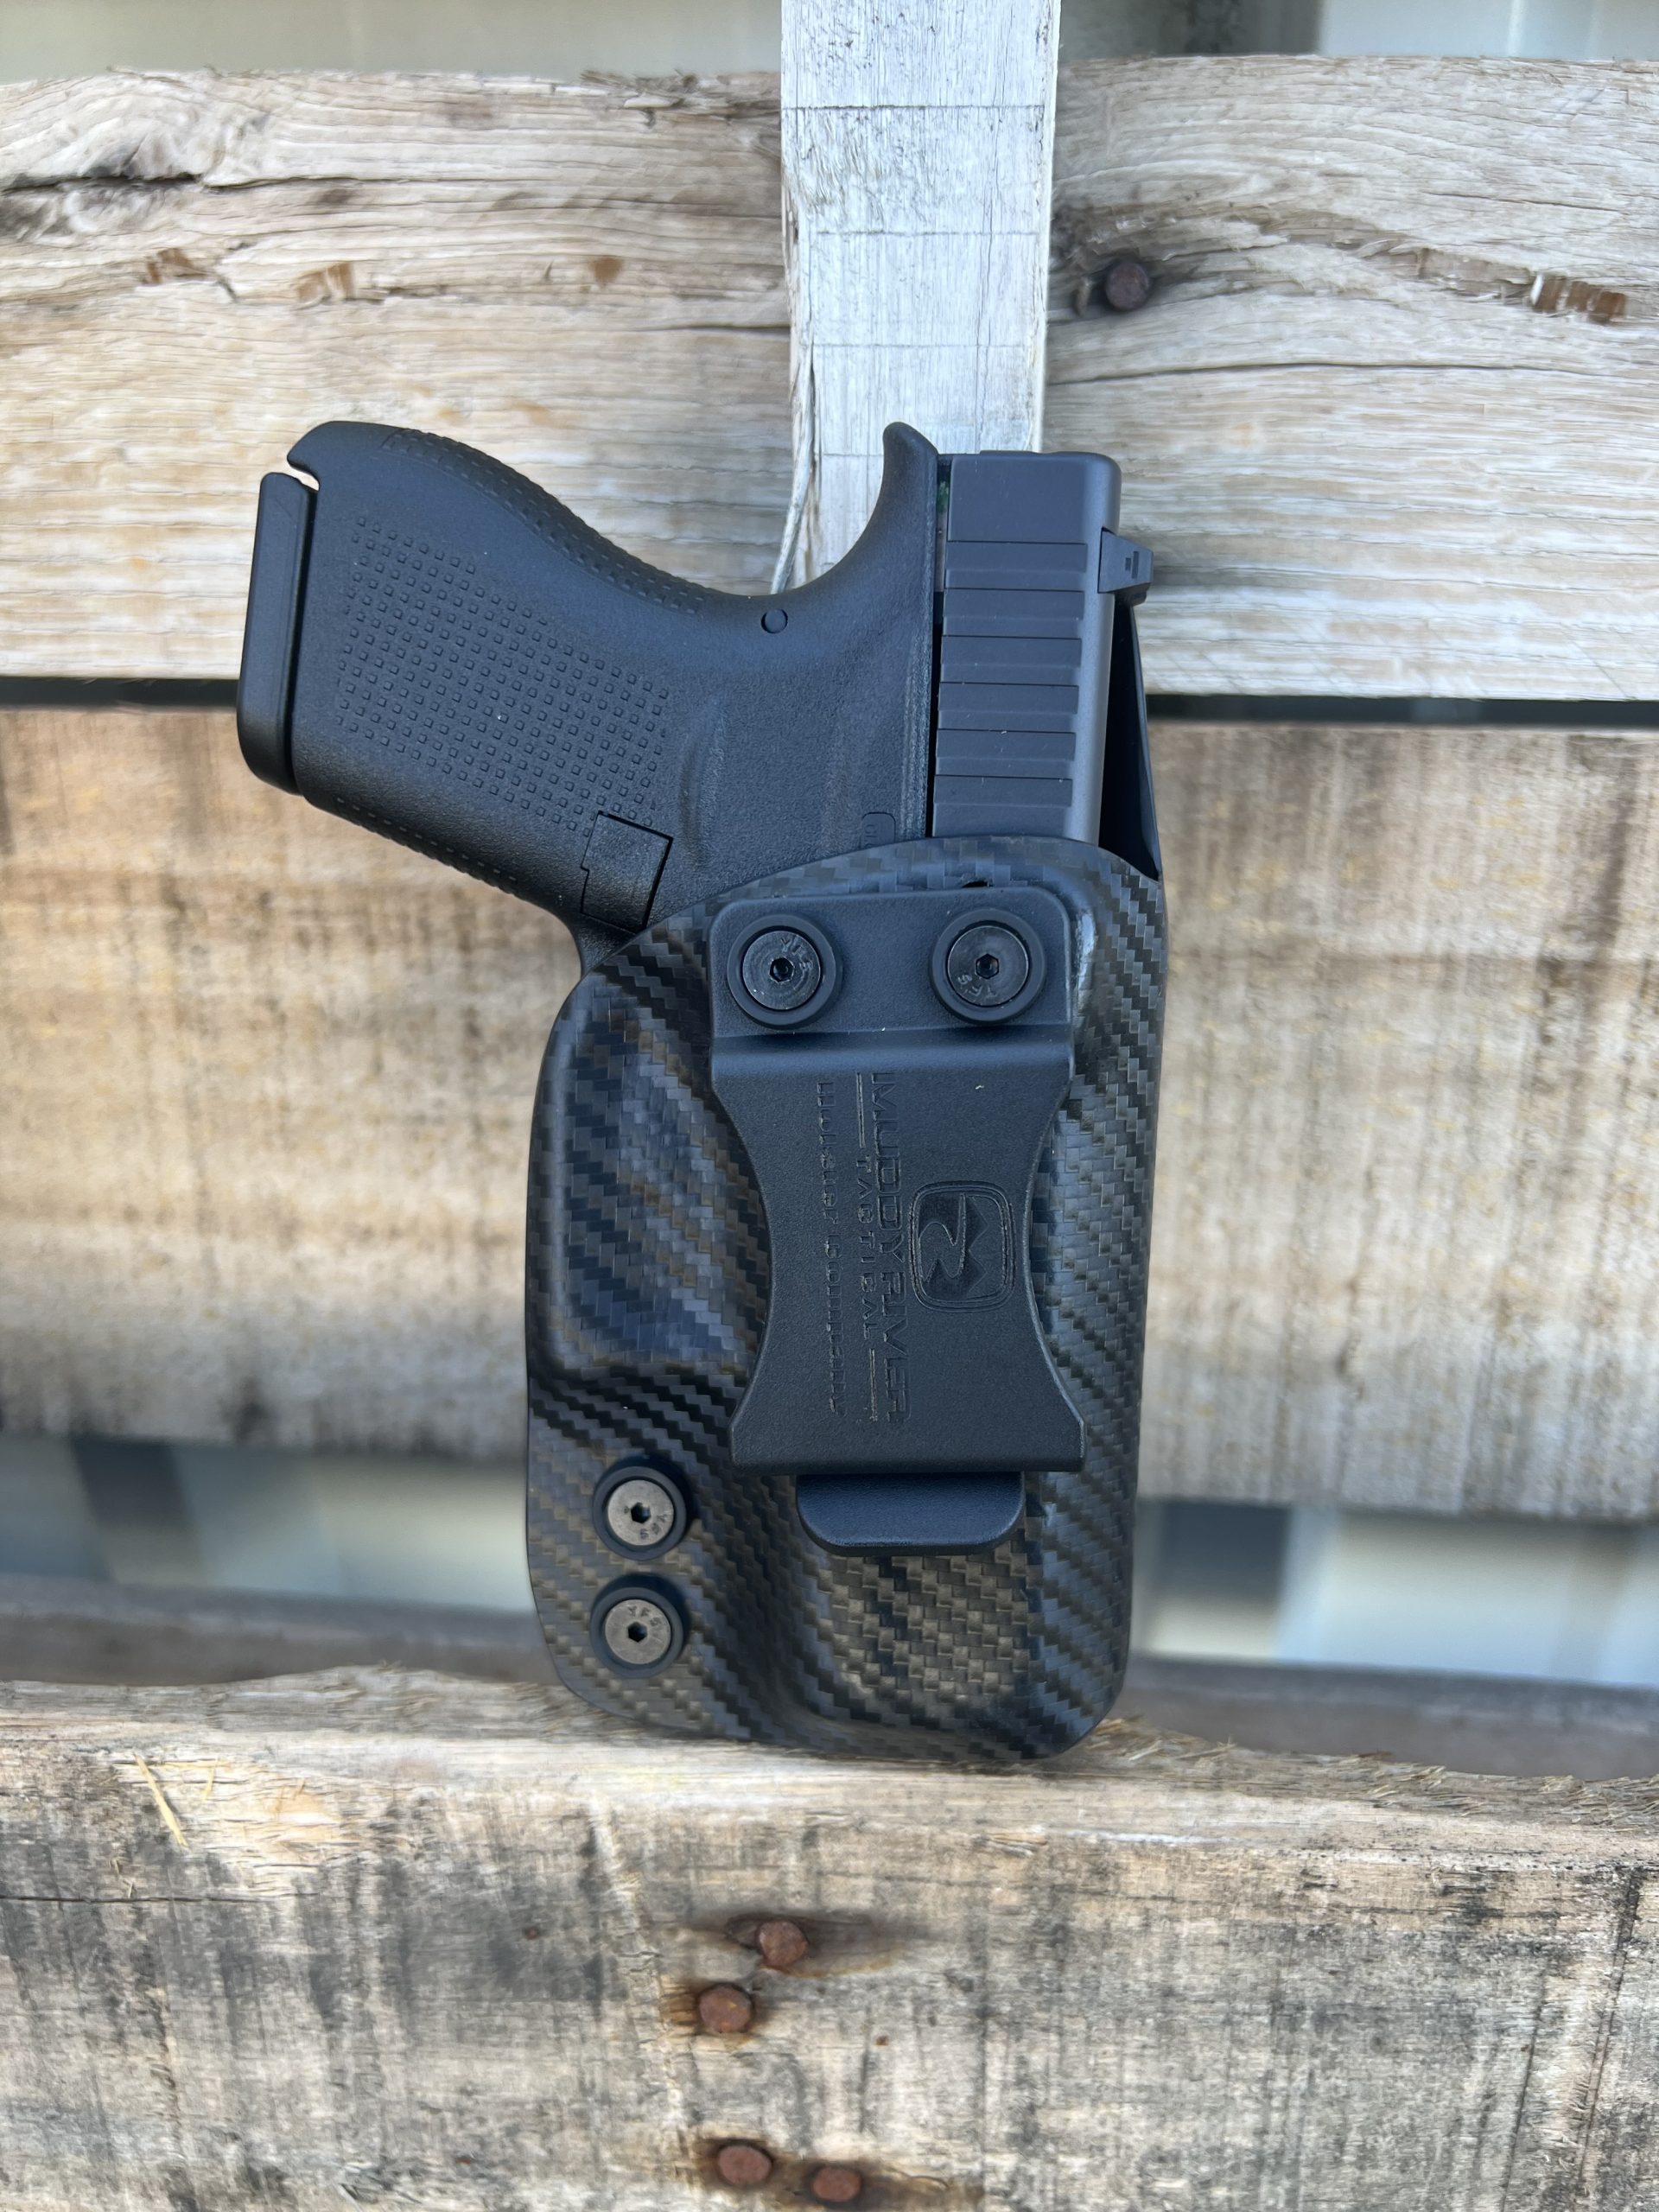 Glock 42 Holster - Made in U.S.A. - Lifetime Warranty